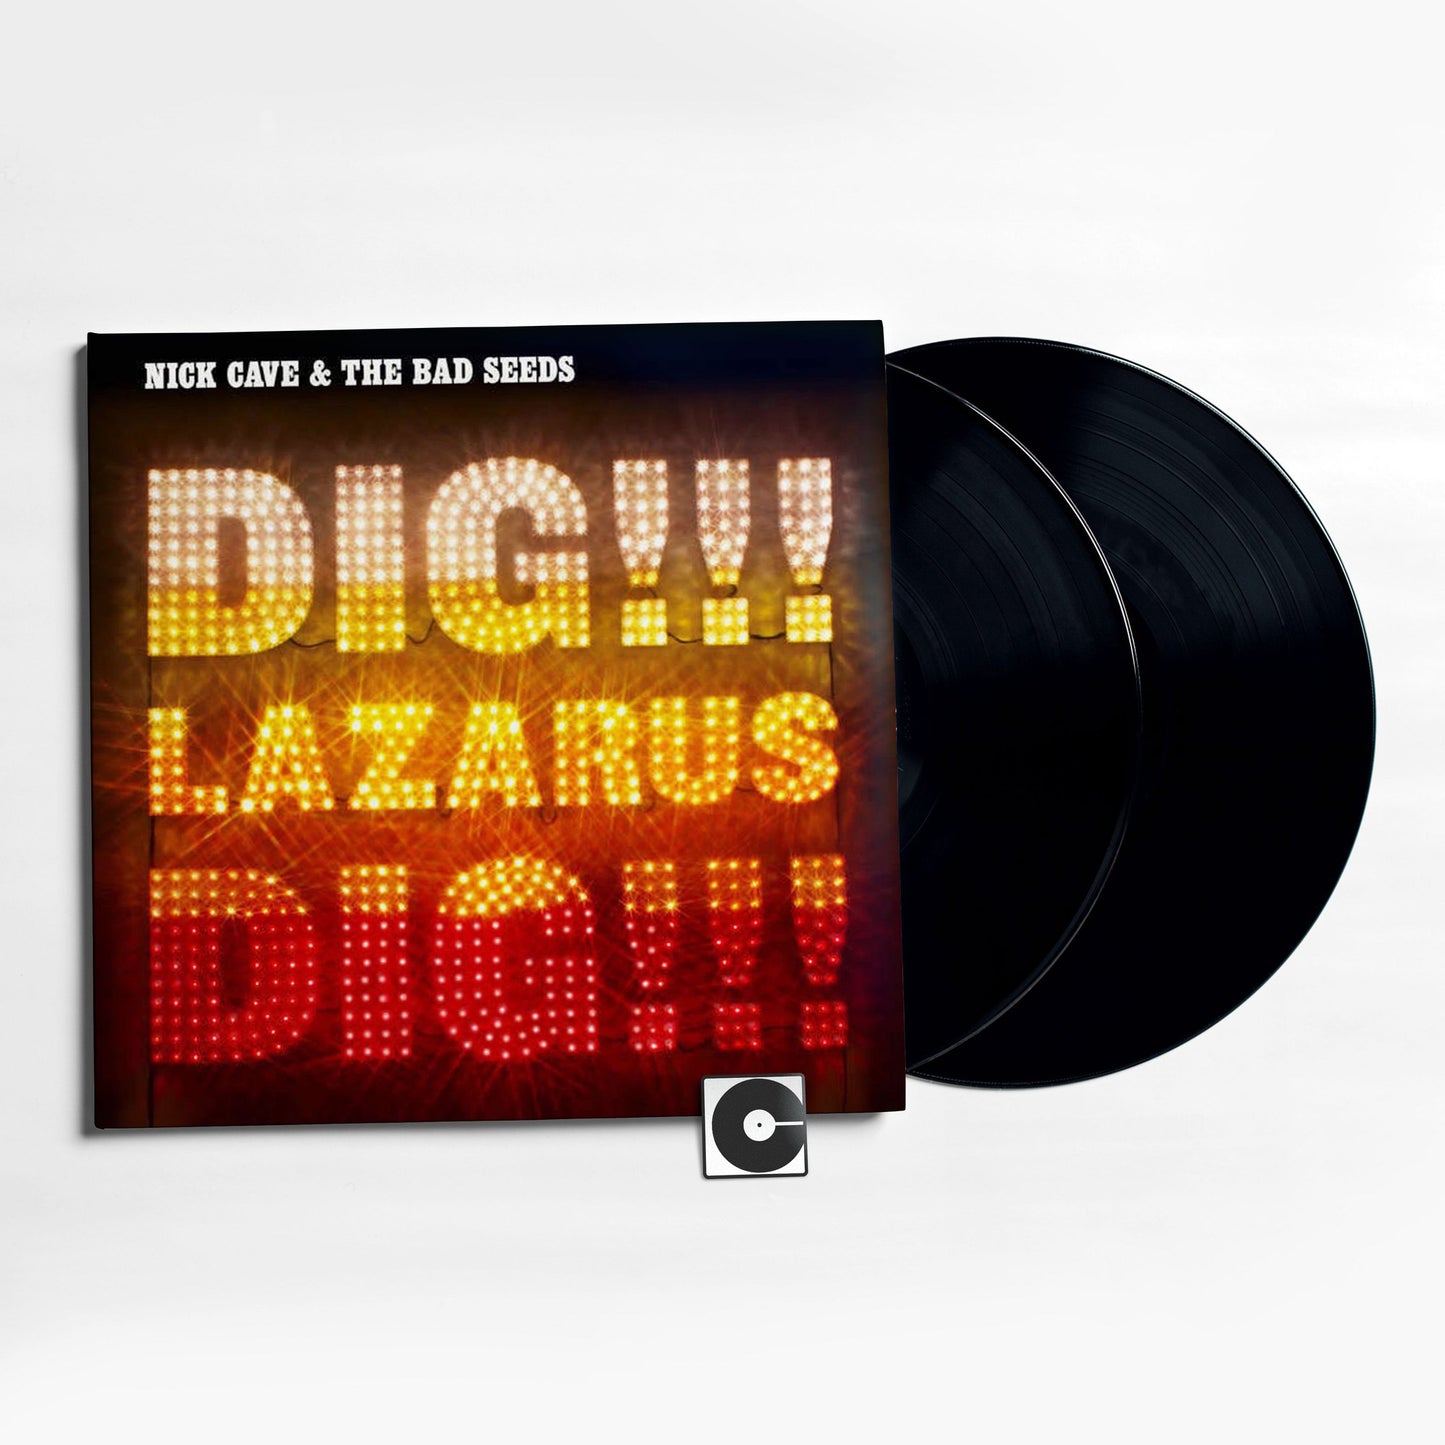 Nick Cave & The Bad Seeds - "Dig, Lazarus Dig!!!"